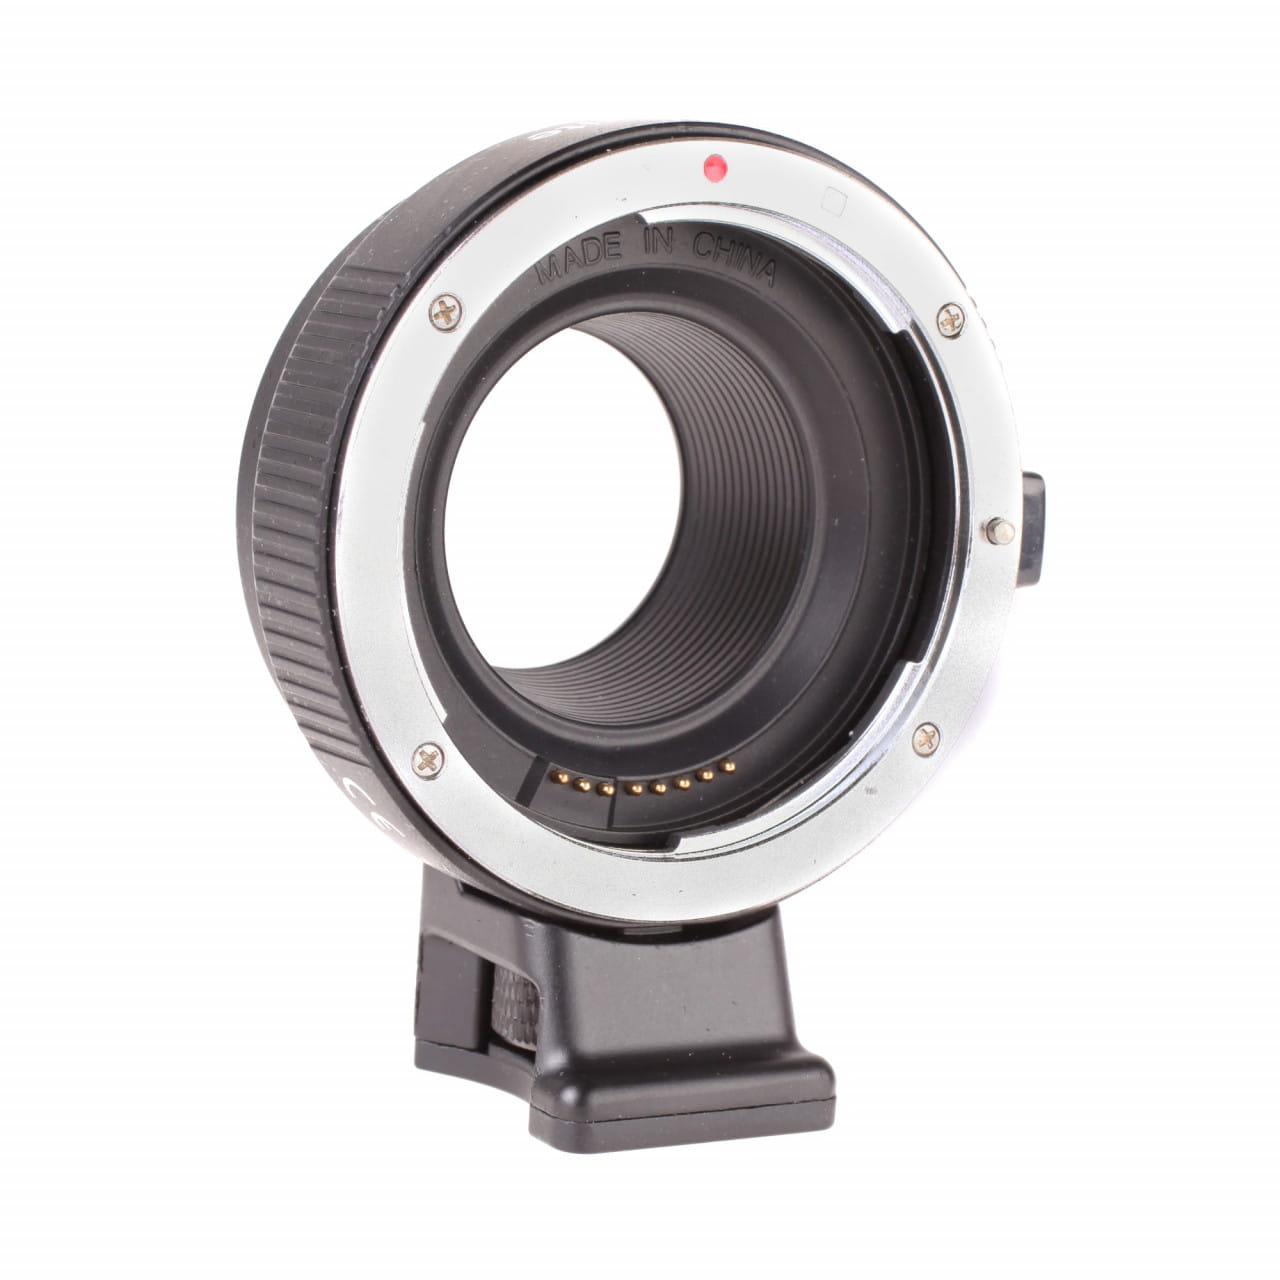 Autofokus-Objektivadapter für Canon-EOS-Objektiv an Canon-EOS-M-Kamera – Commlite CM-EF-EOSM